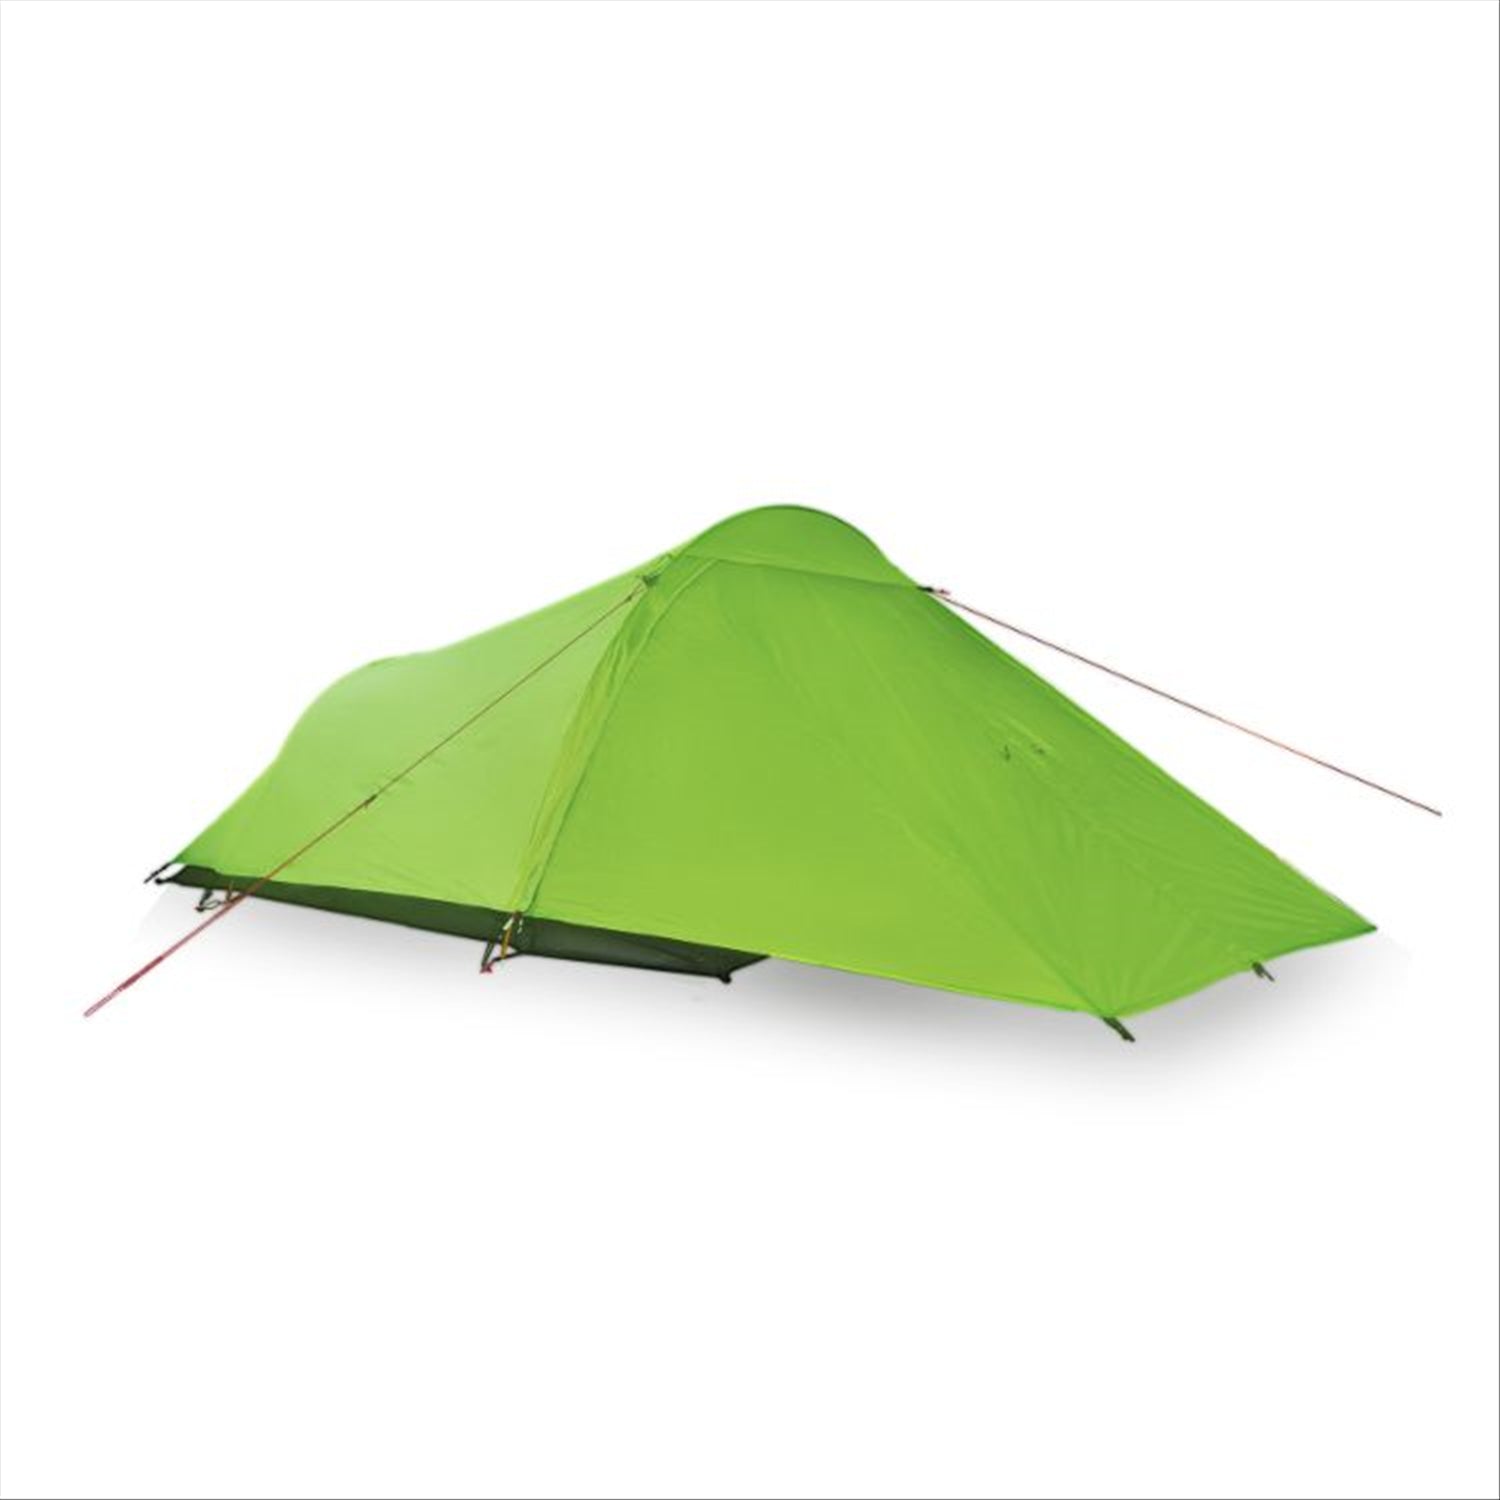 Ranger 2 - Lightweight 2 Person Backpacking Tent, 2kg